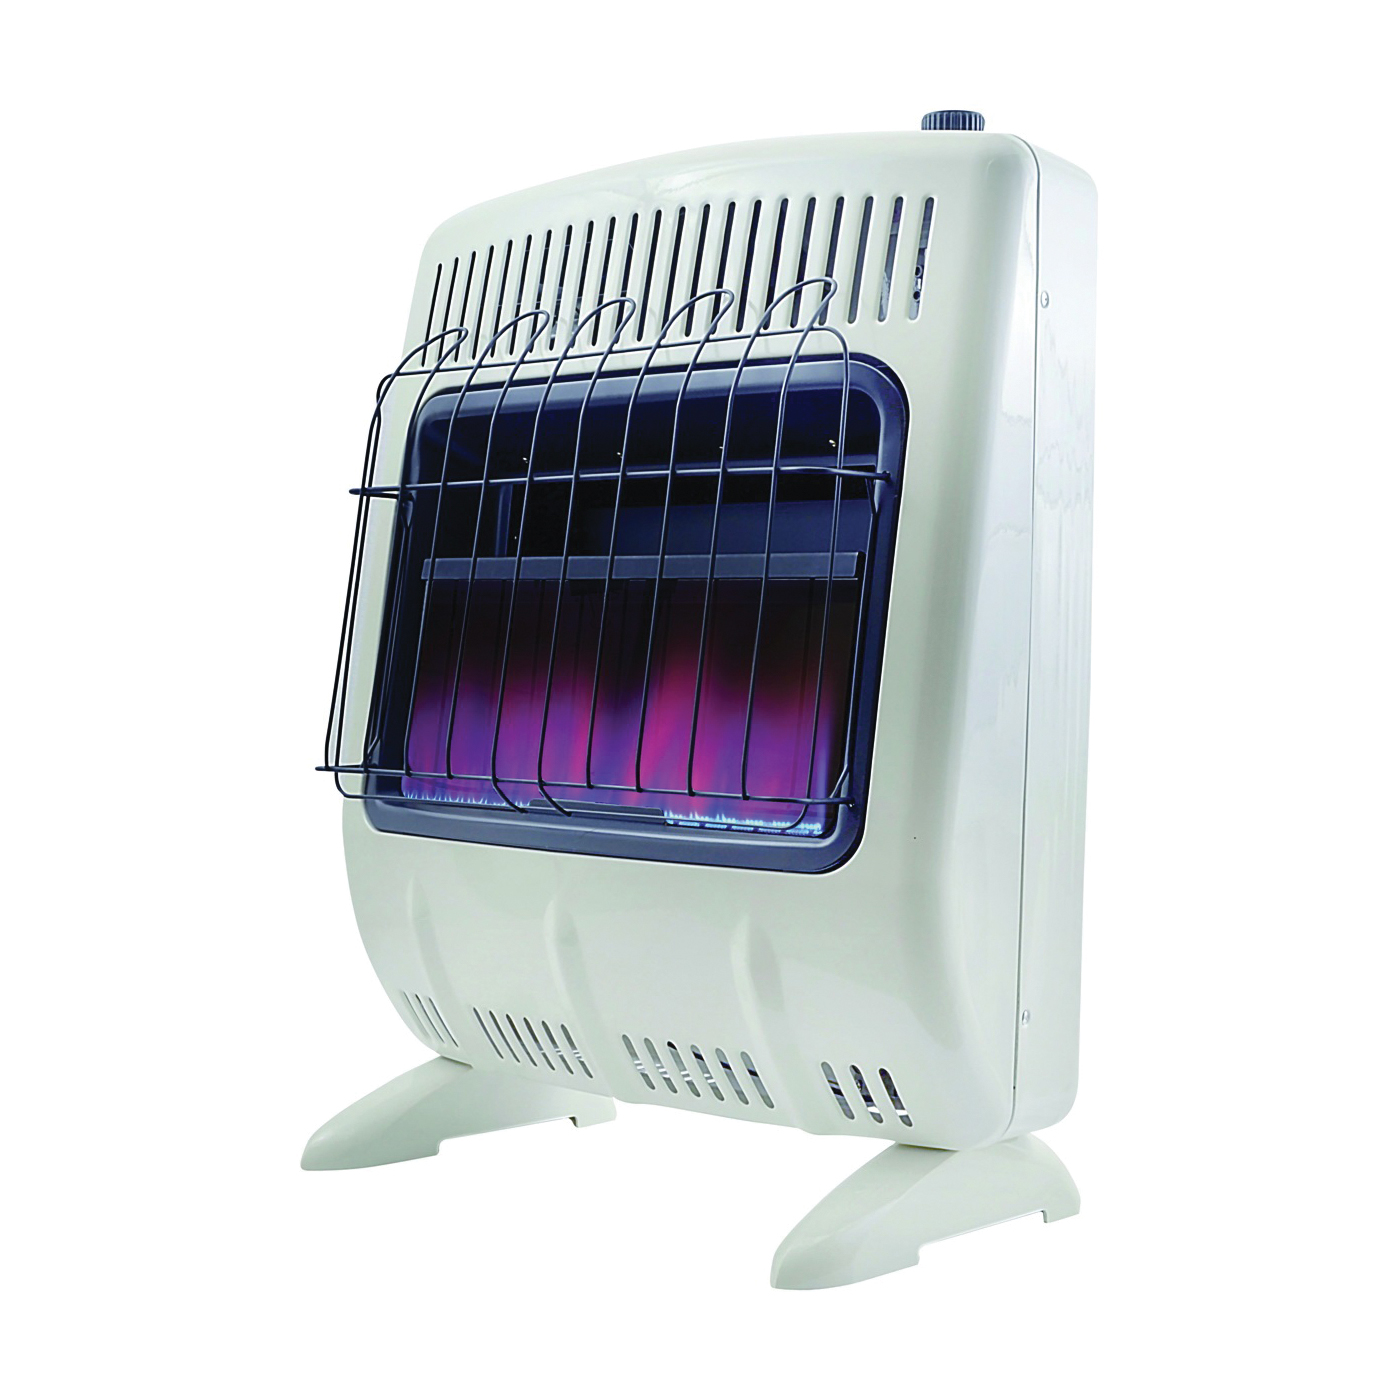 Mr. Heater F299720 Vent-Free Blue Flame Gas Heater, 20 lb Fuel Tank, Propane, 20000 Btu, 500 sq-ft Heating Area